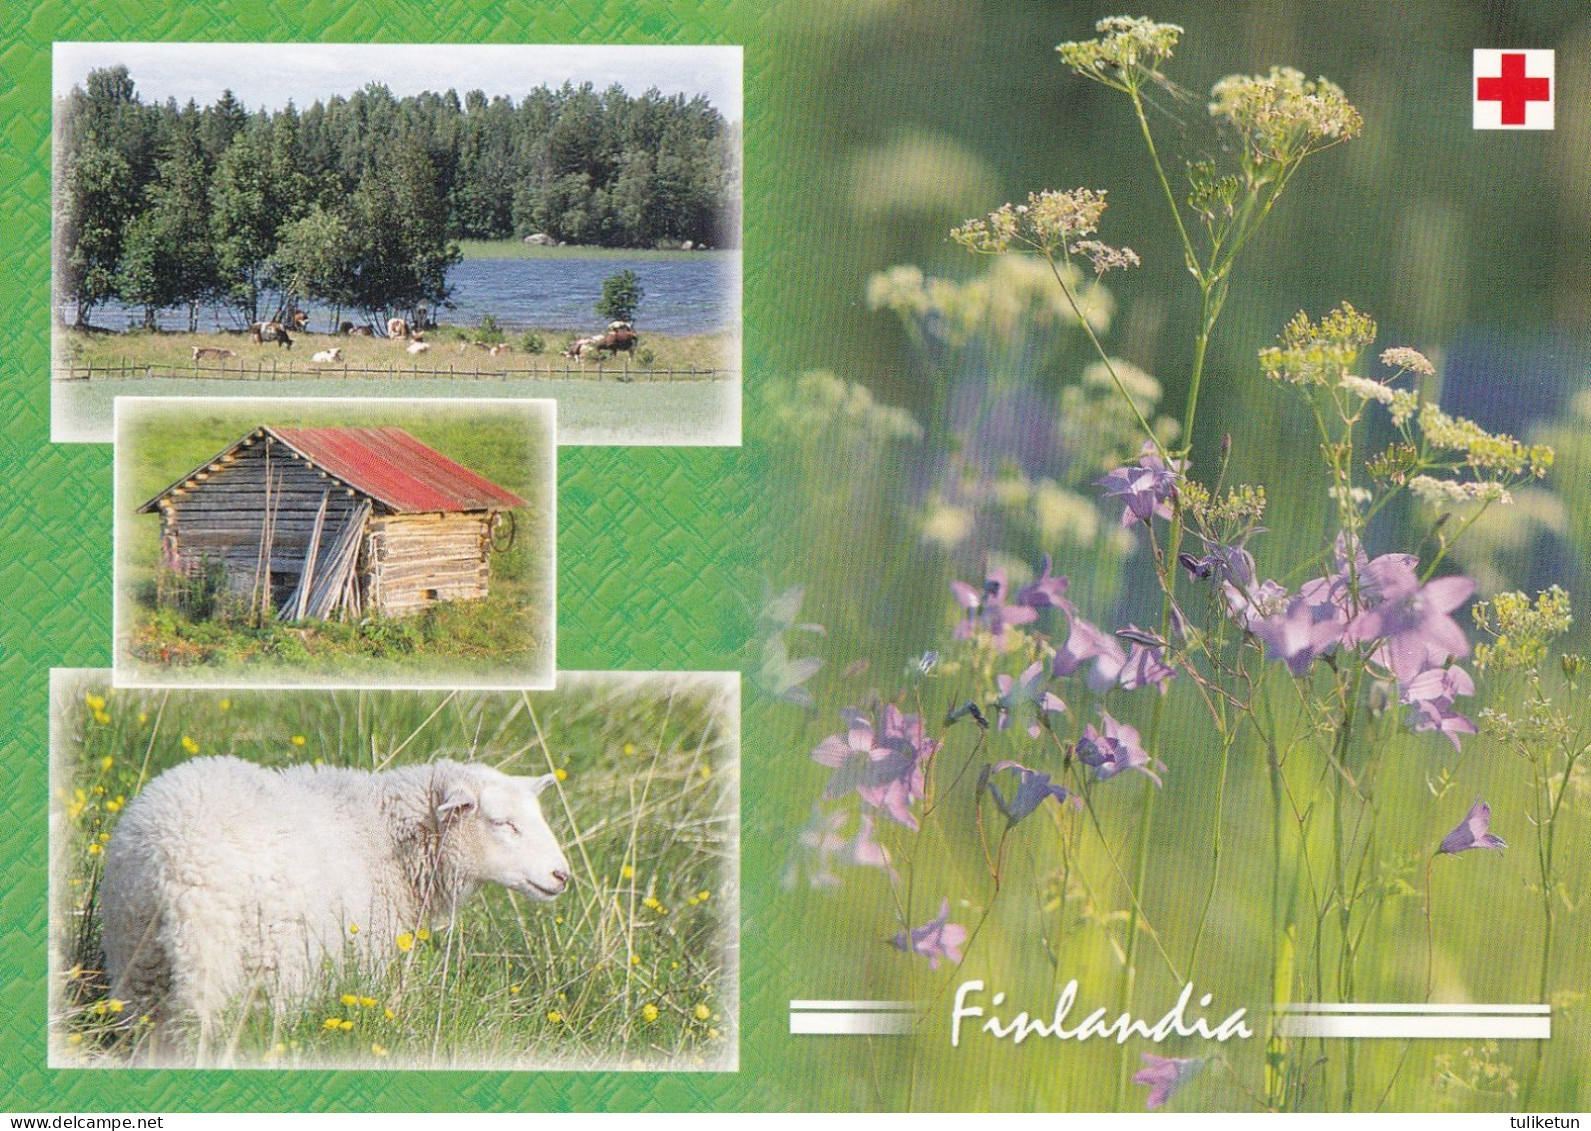 Postal Stationery - Summer Landscape - Scene - Red Cross 2003 - Finlandia - Suomi Finland - Postage Paid - Postal Stationery